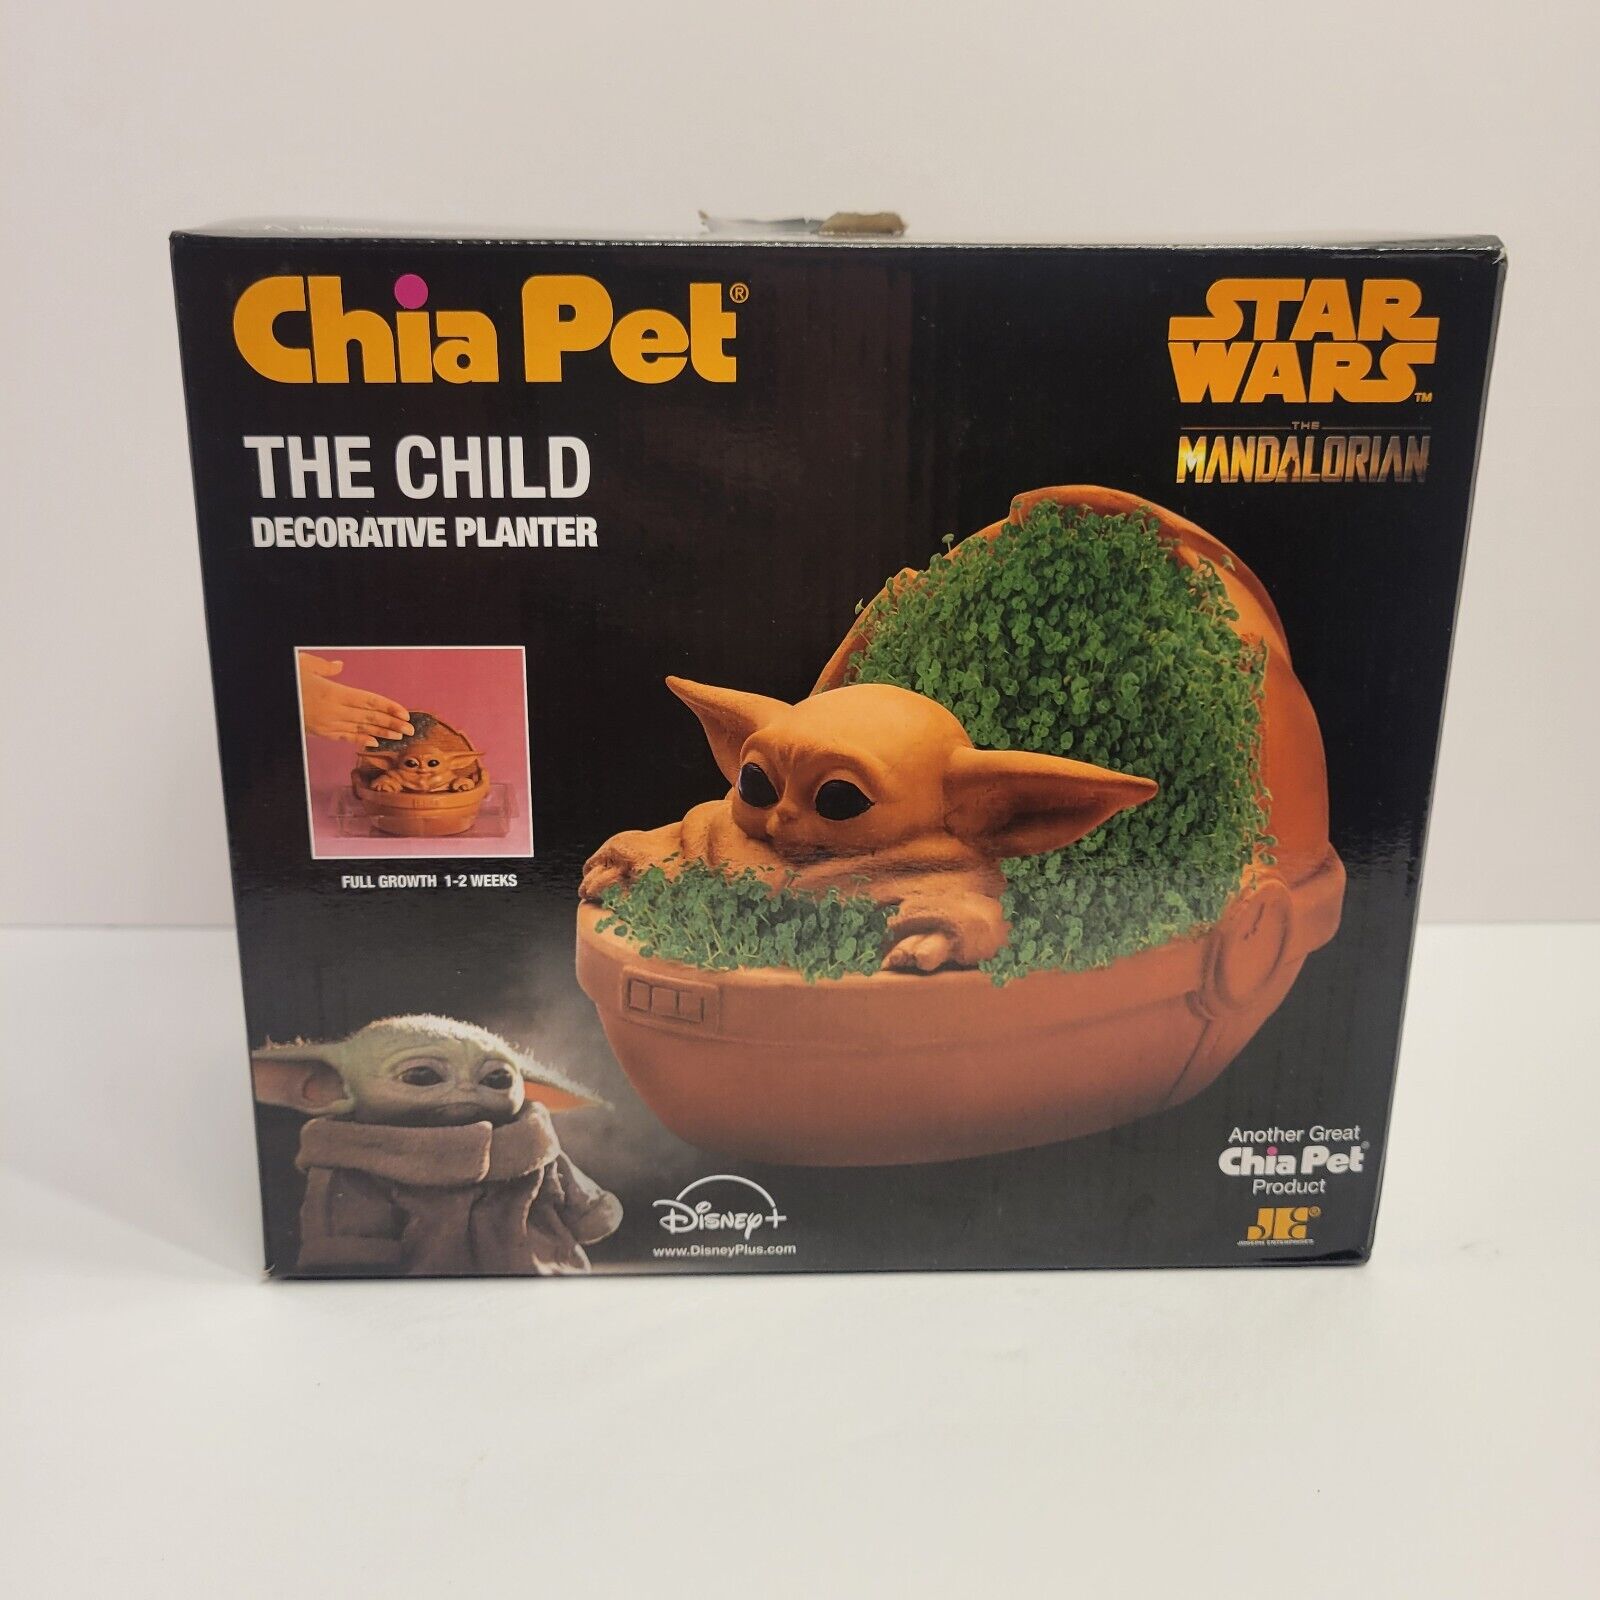 Disney Star Wars Chia Pet The Mandalorian The Child Baby Yoda Grogu Planter